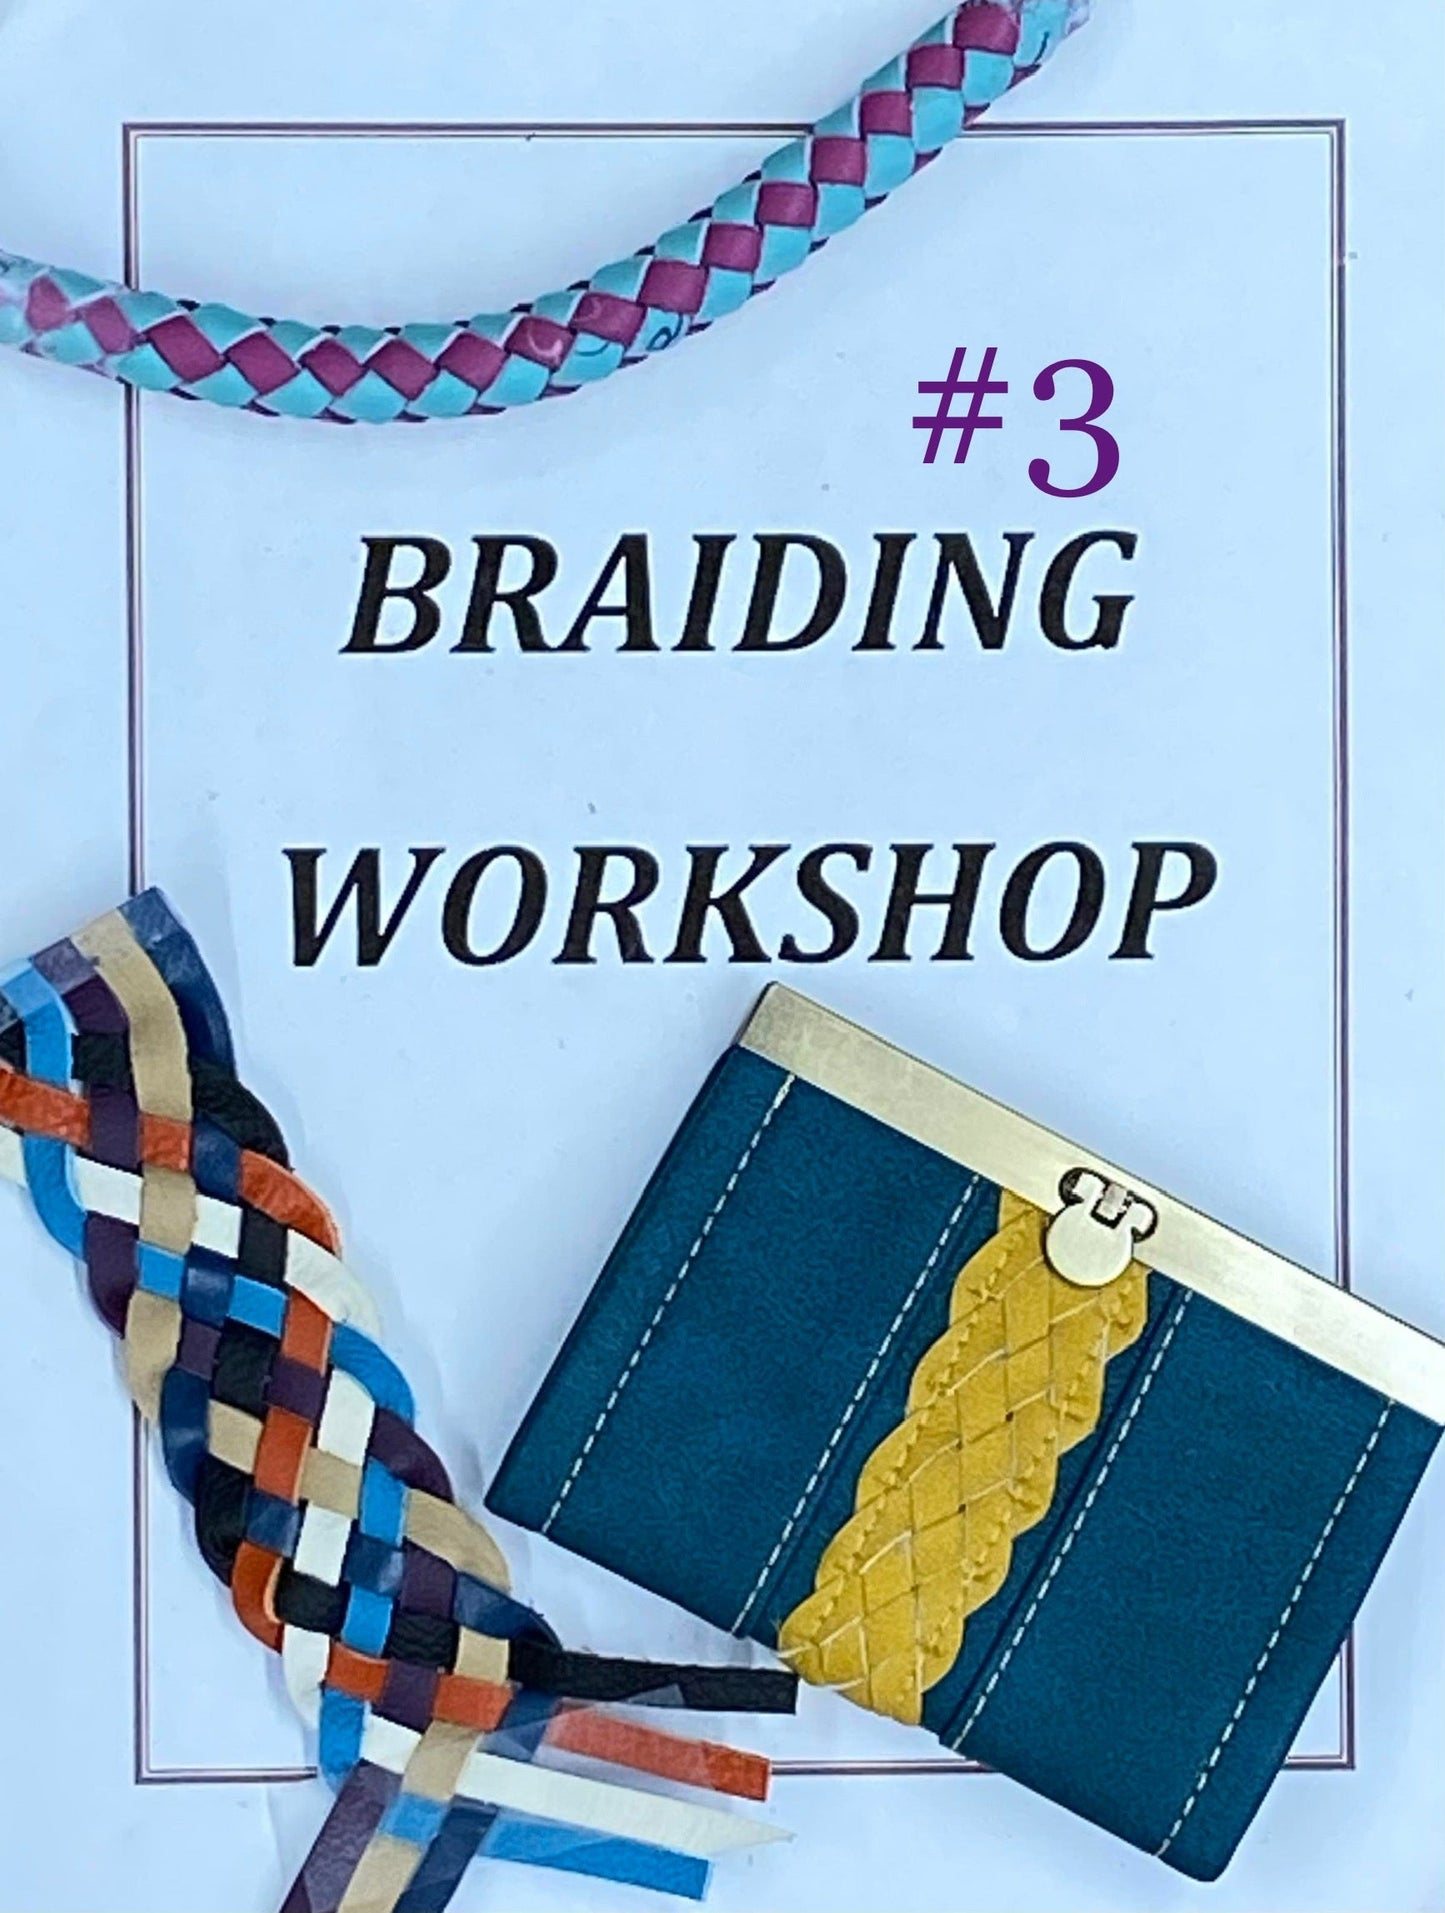 Braiding Workshop #3- Video 3, Session 3